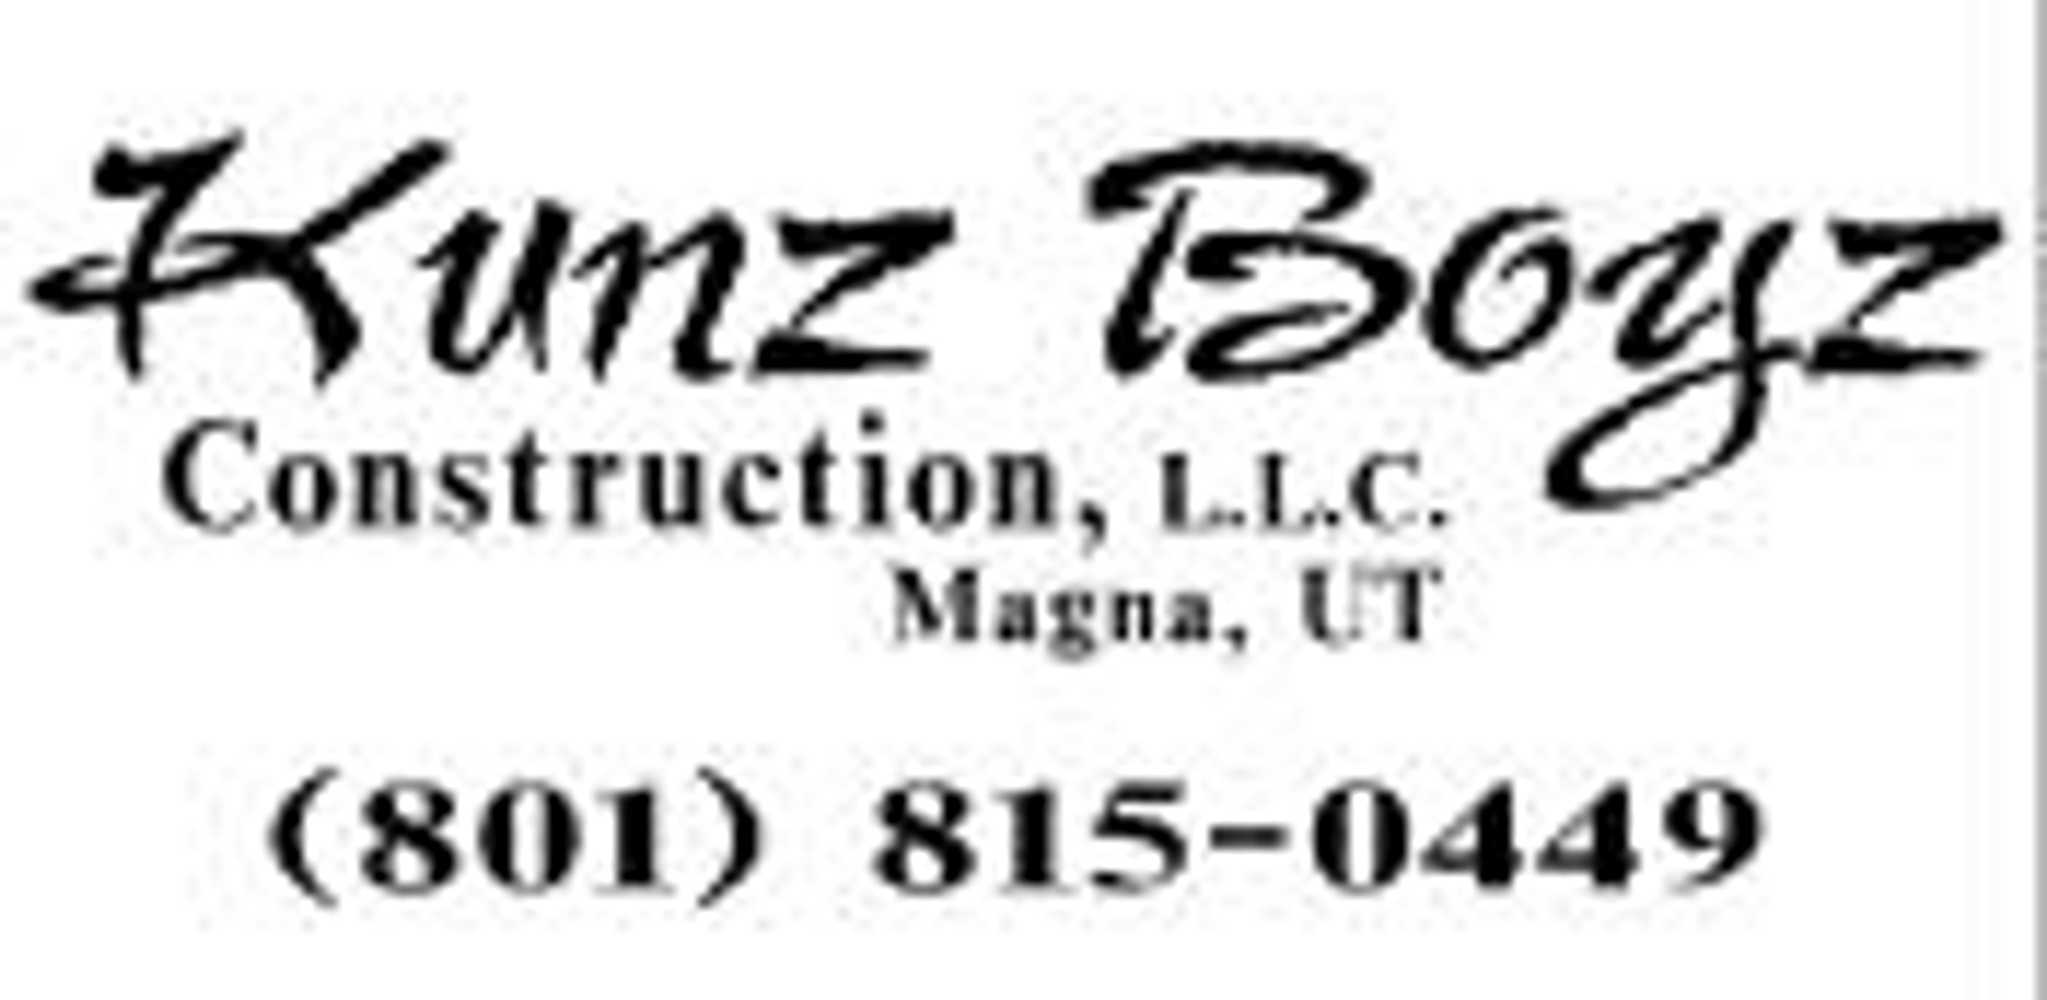 Photo(s) from Kunz Boyz Construction Inc